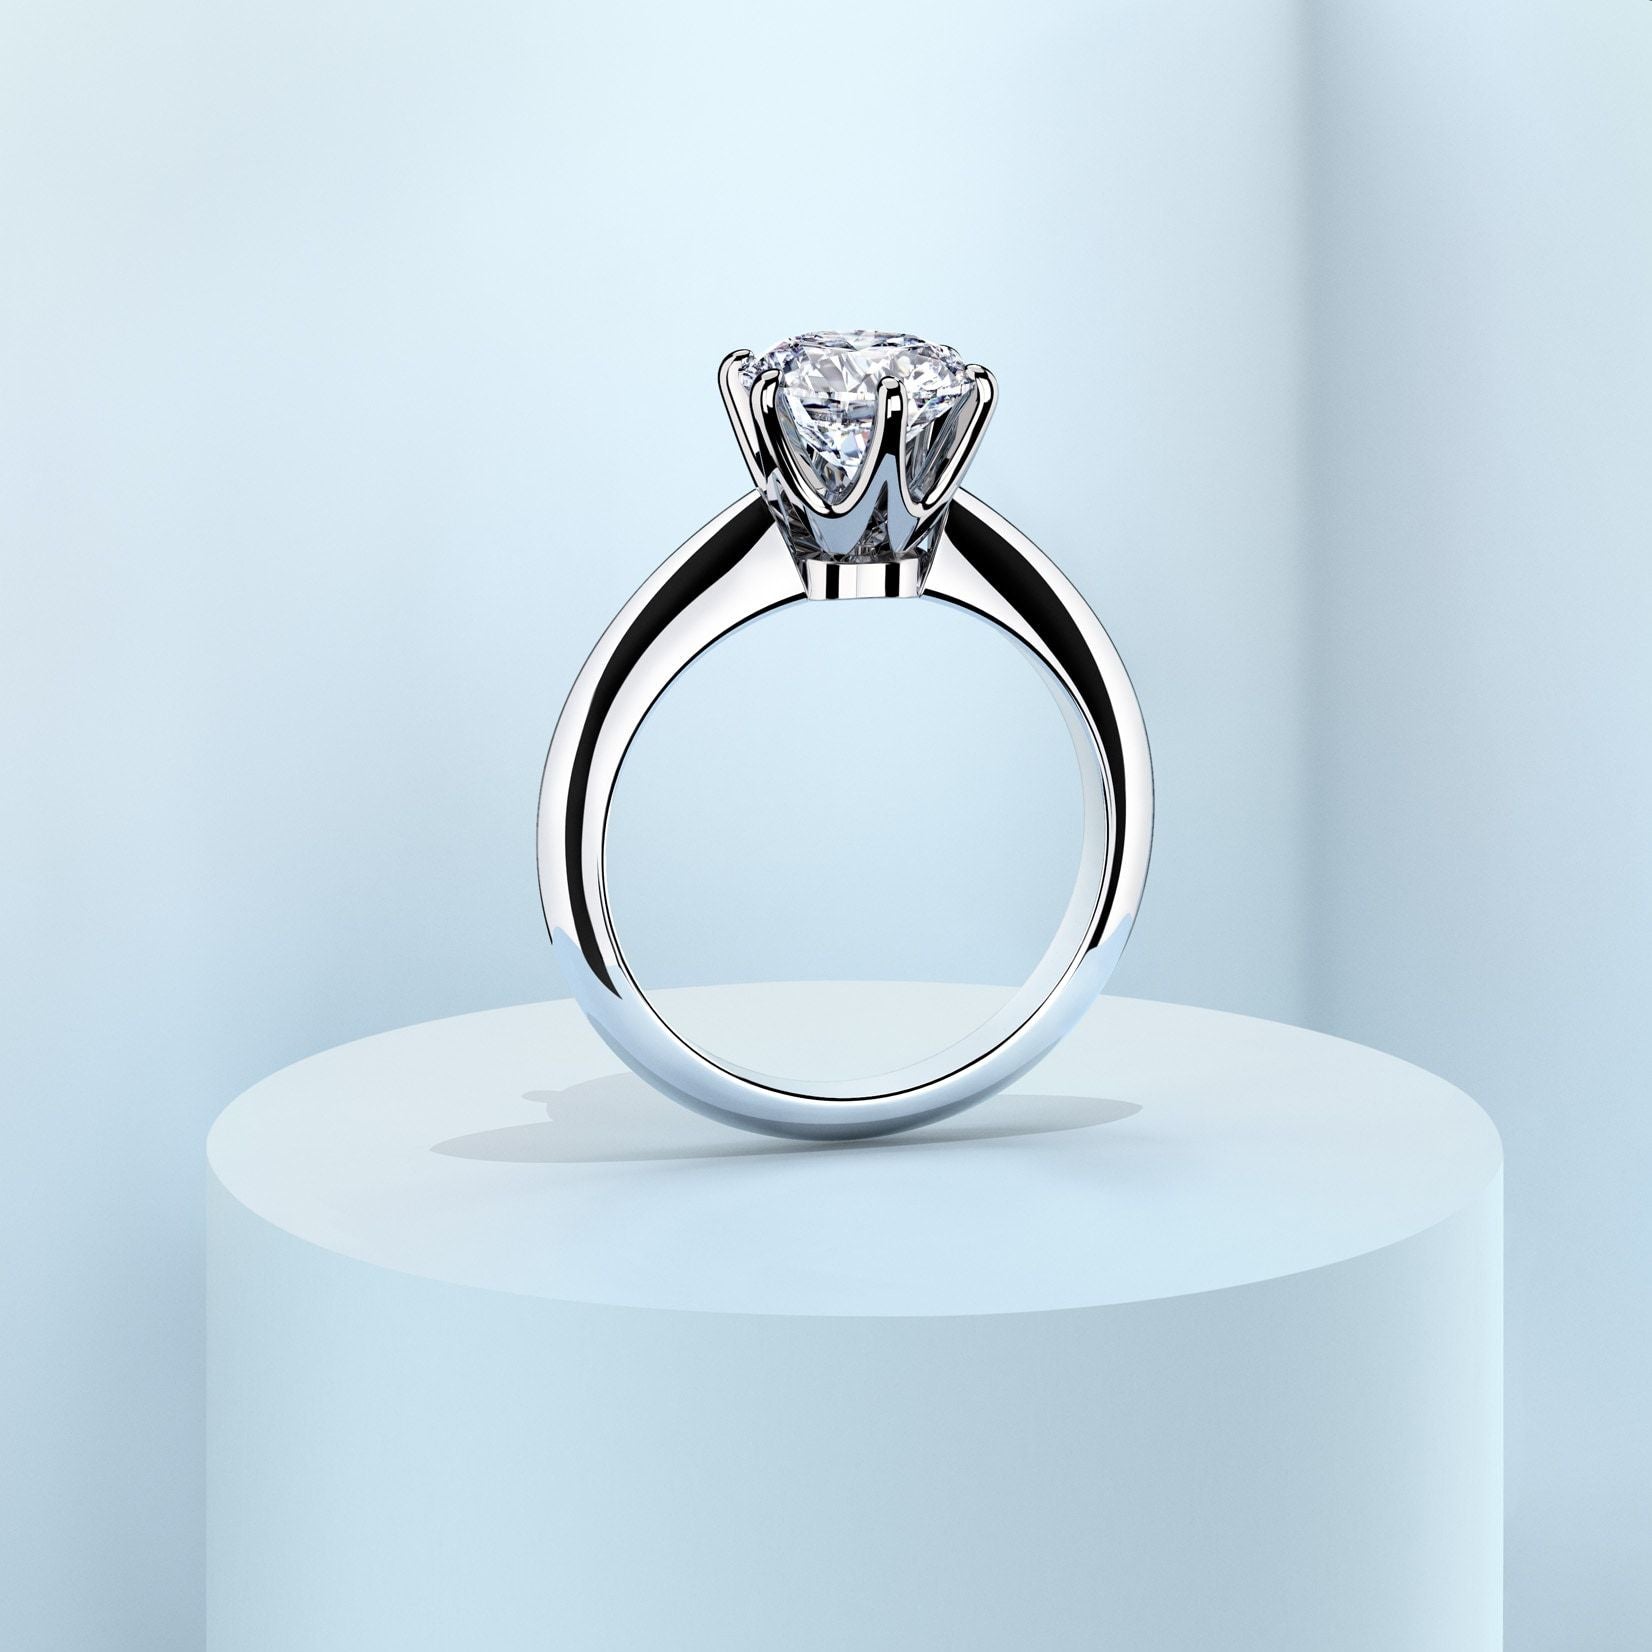 Should Men's Engagement Rings Be Gold or Platinum?